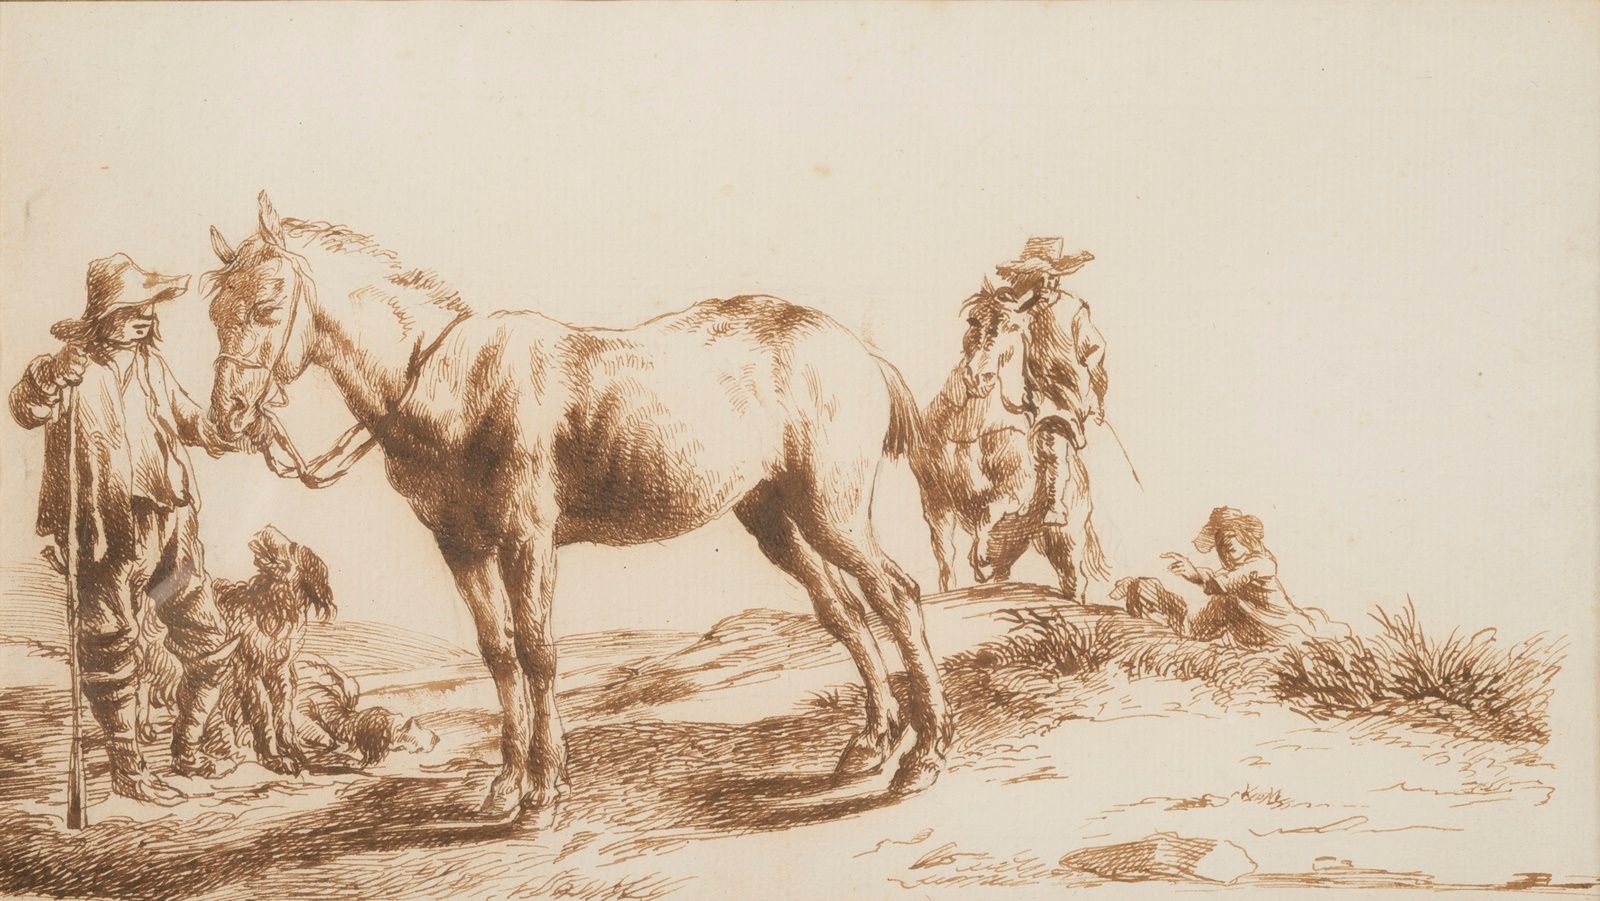 Null 18世纪的意大利学校
骑士的停顿
棕色墨水
13 x 23 cm